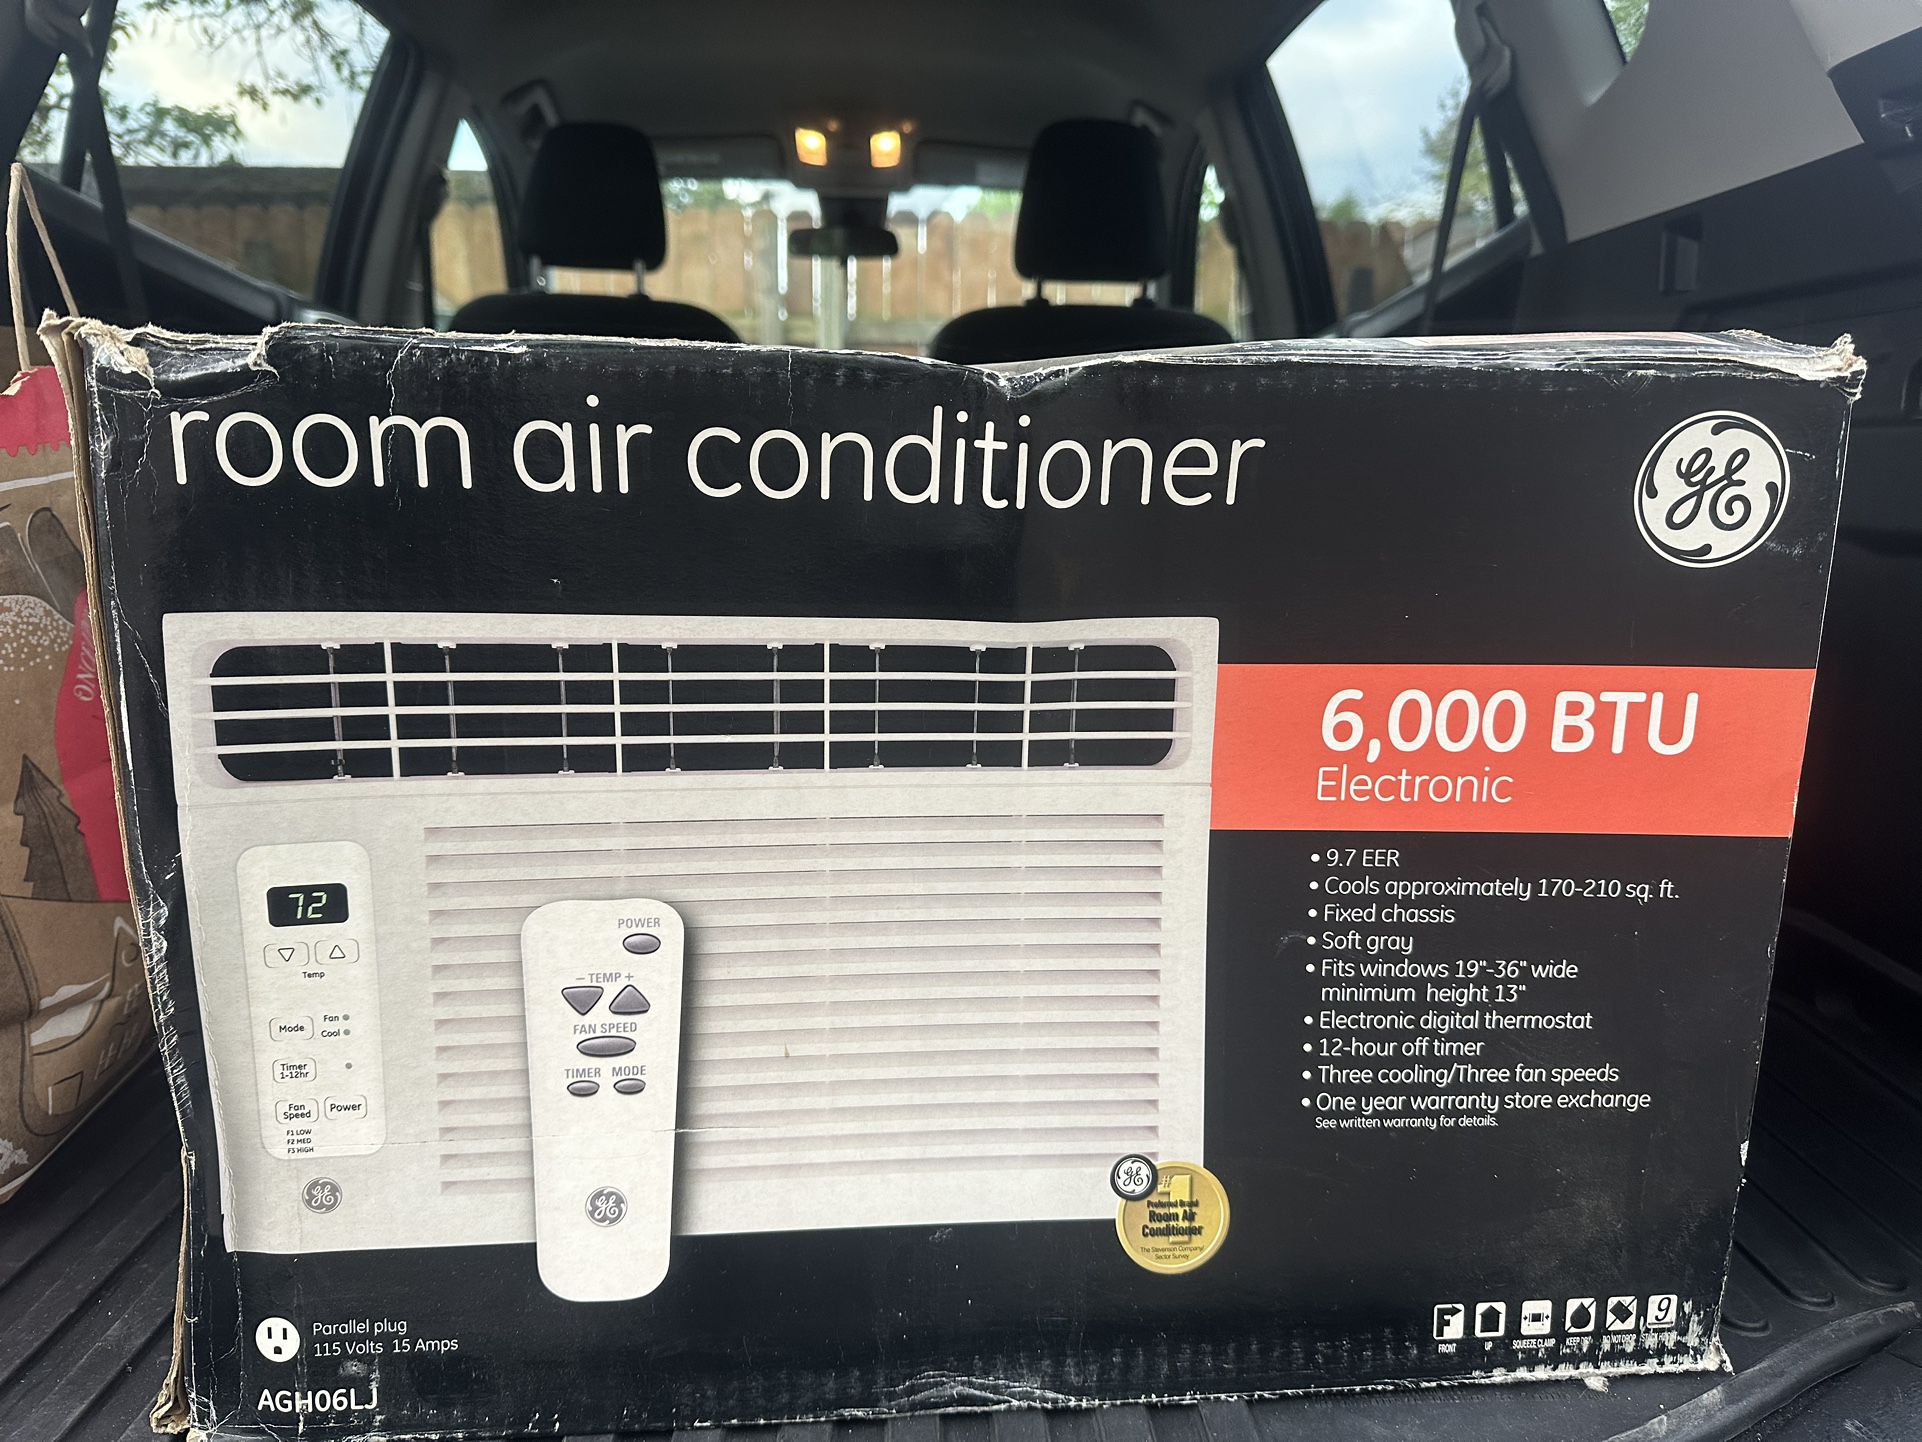 GE Window Air Conditioner